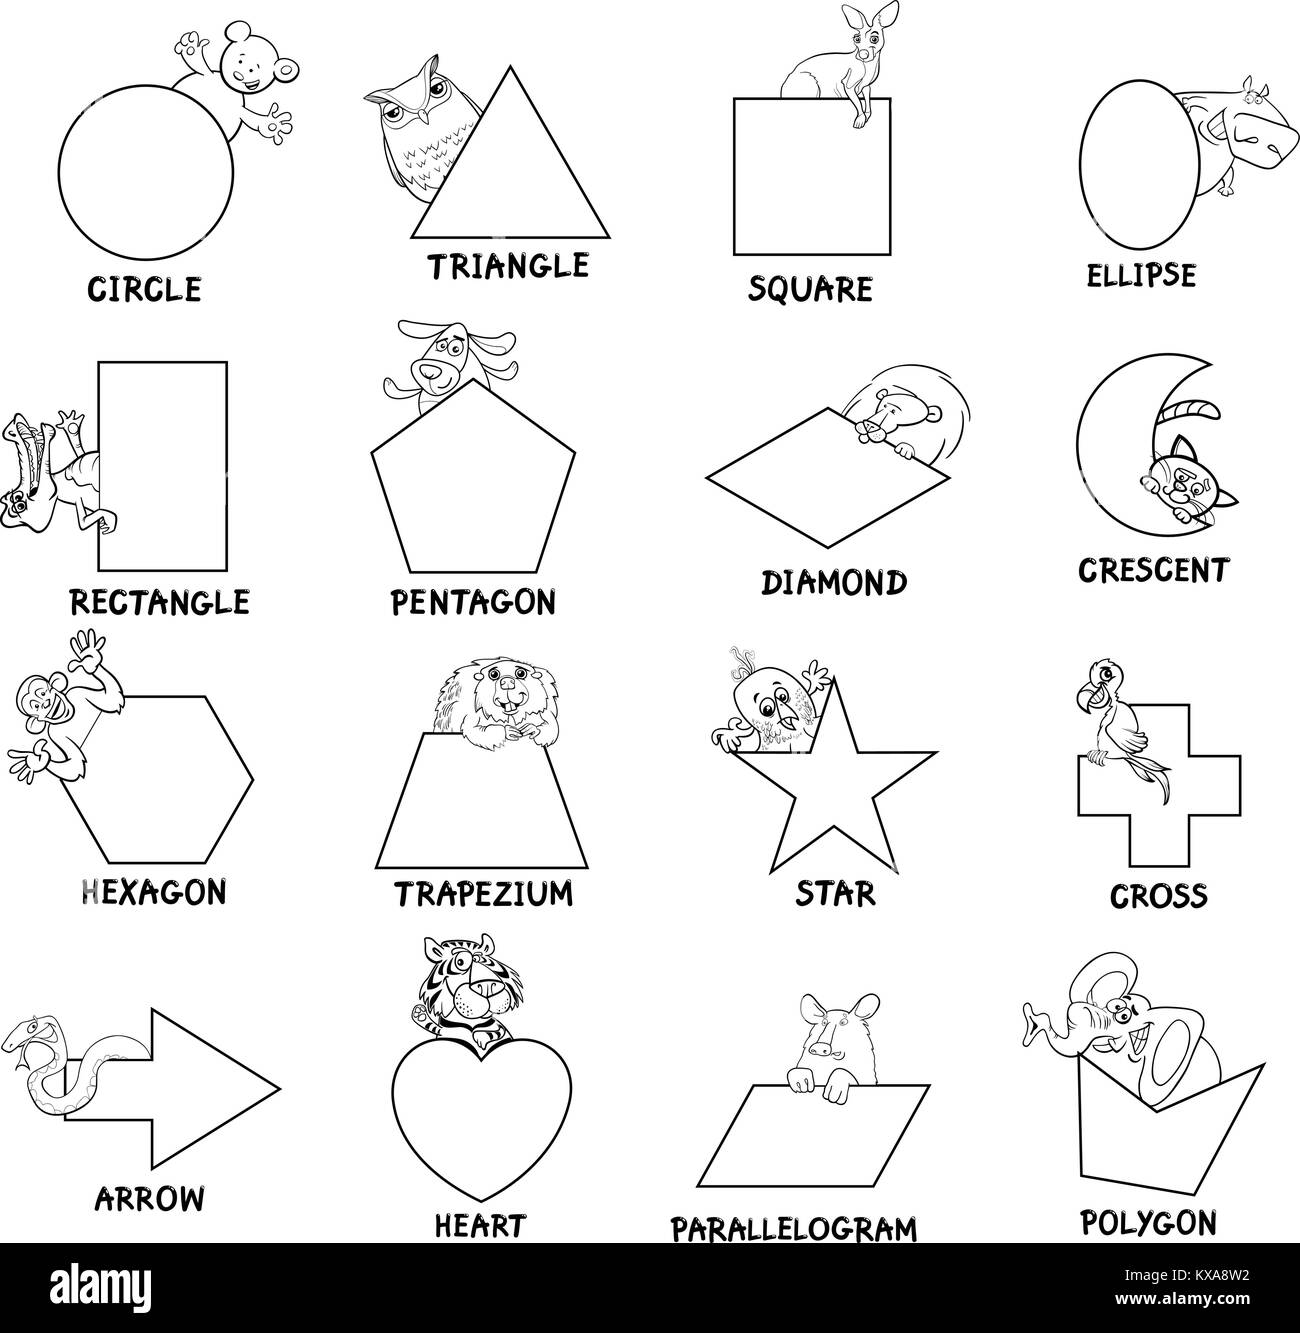 Ilustracion De Dibujos Animados Educativos De Formas Geometricas